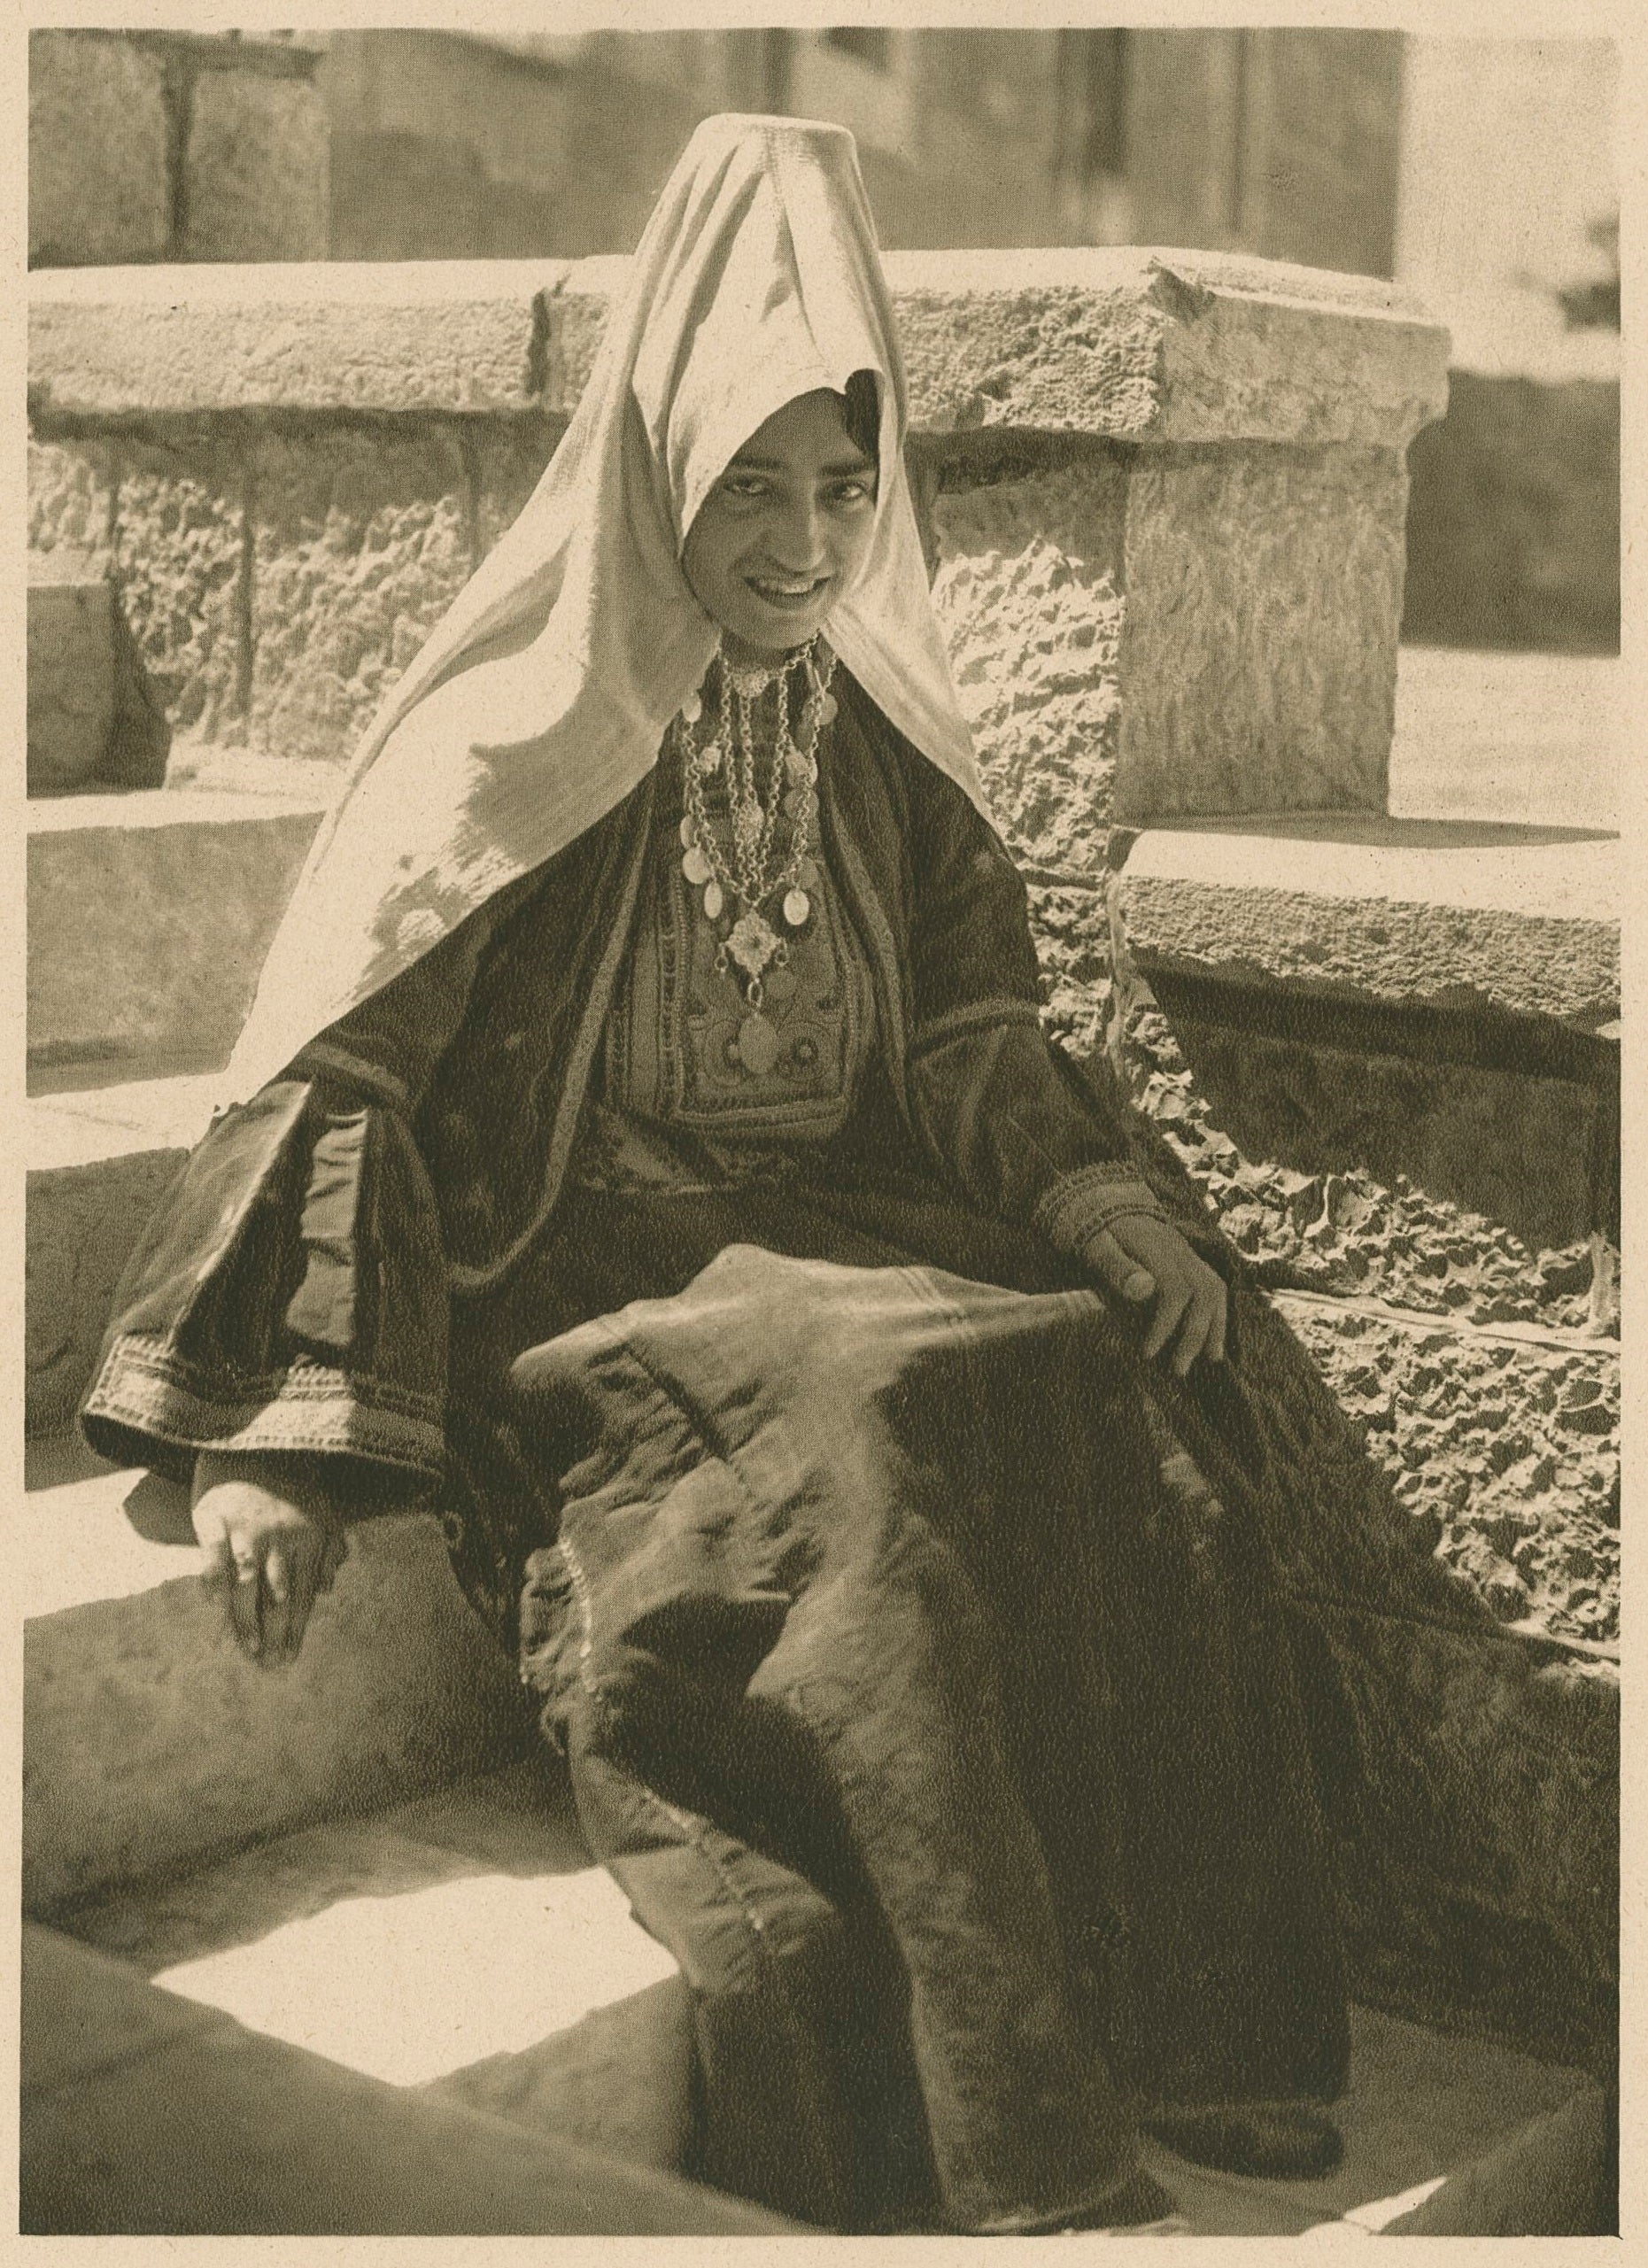 Woman wearing traditional Palestinian clothing